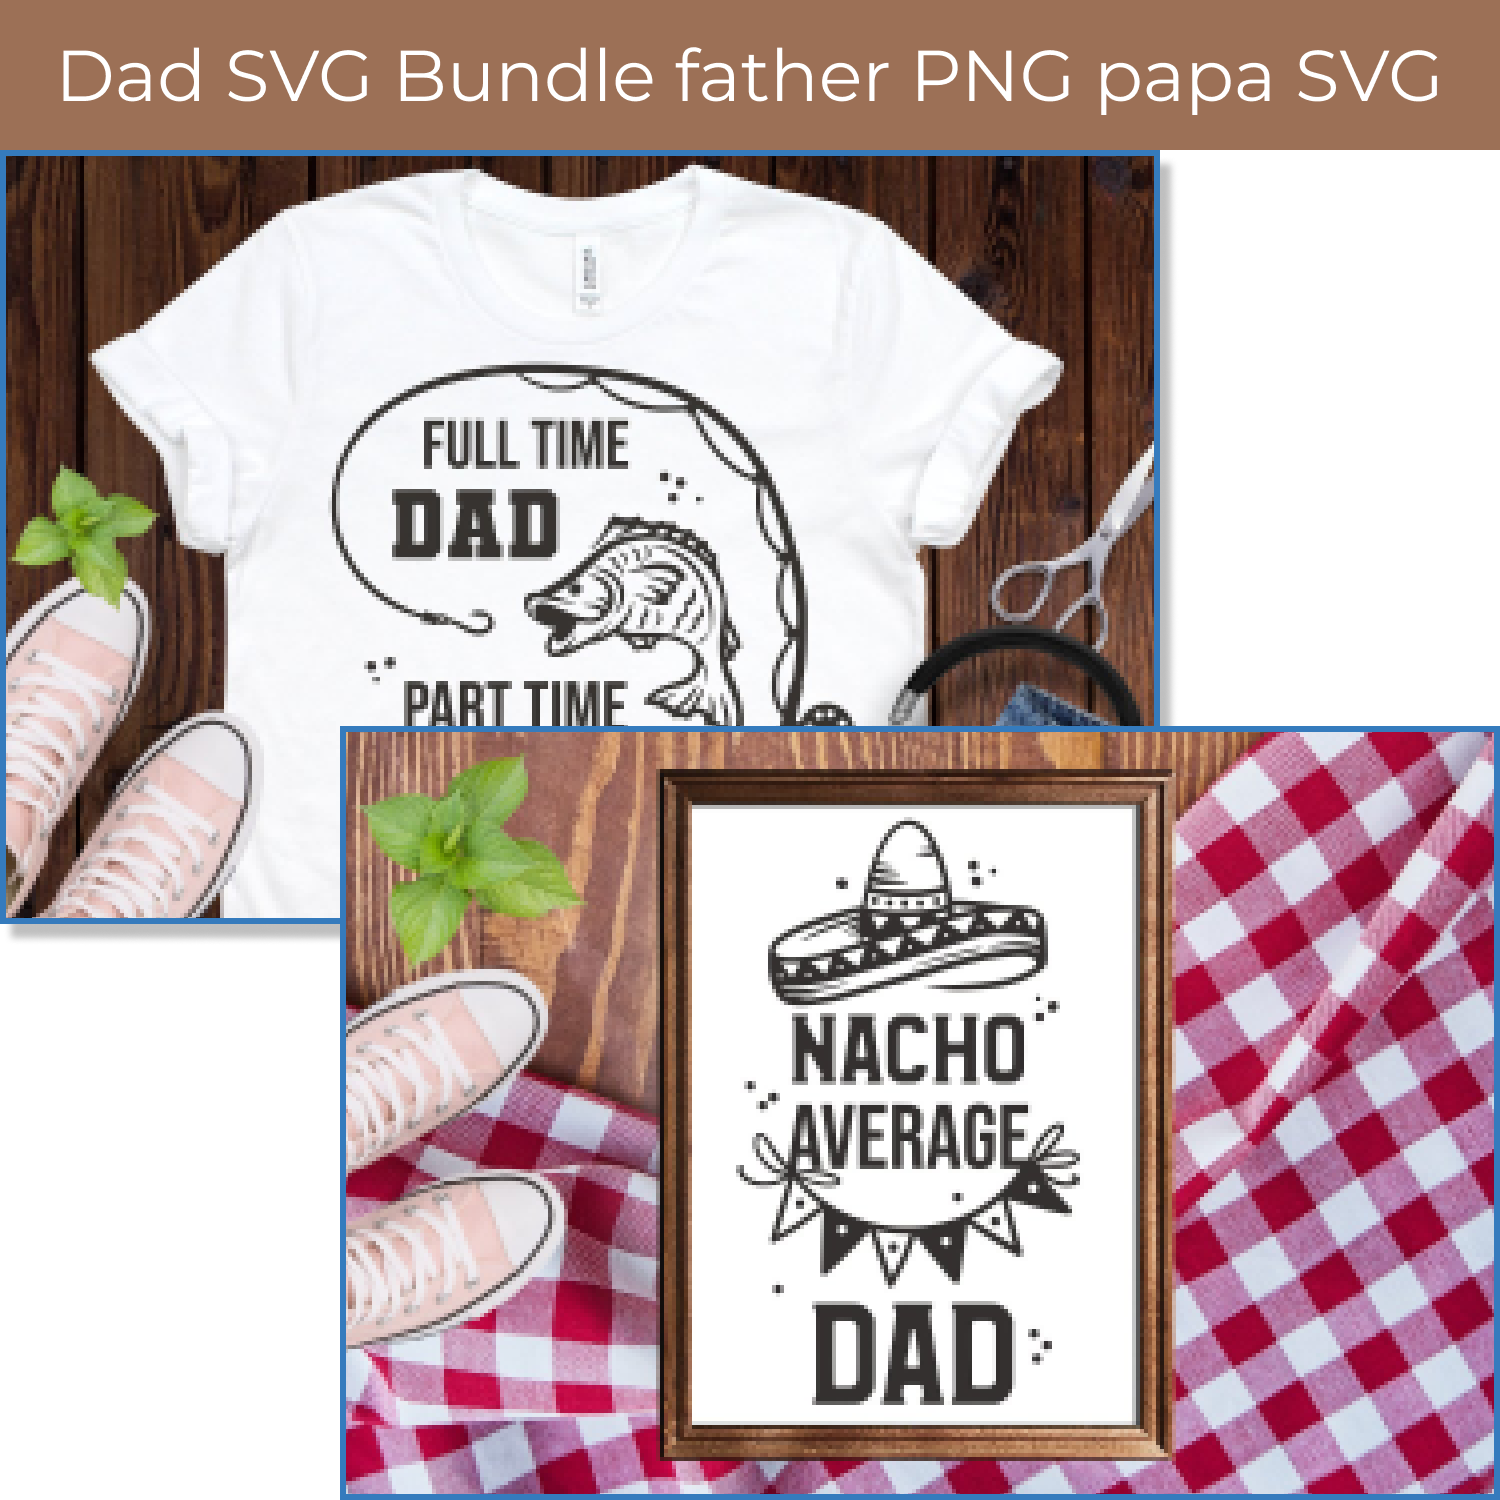 Dad SVG Bundle father PNG papa SVG cover.